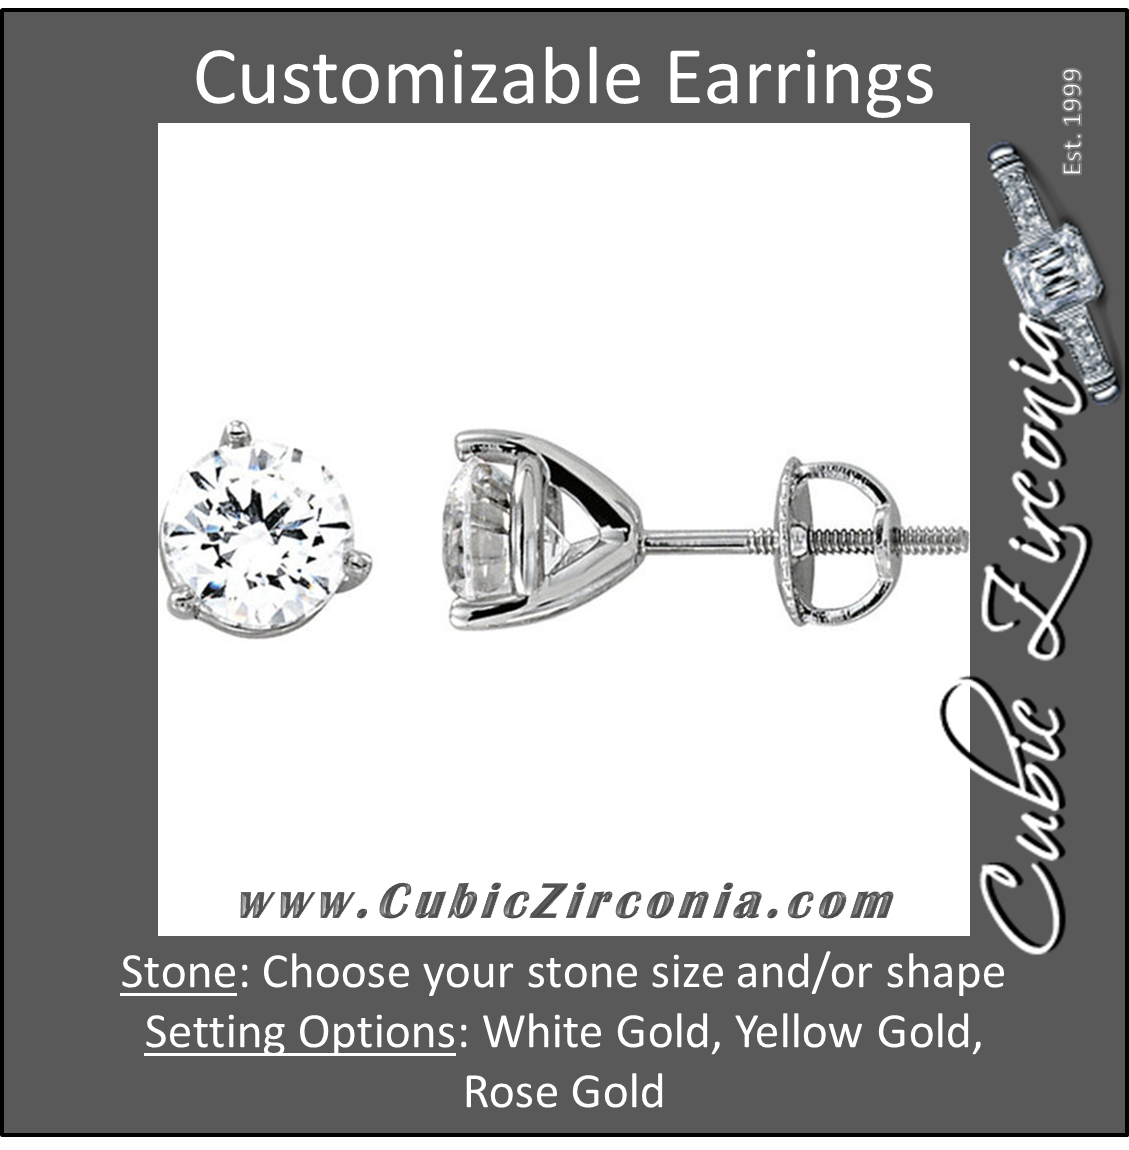 Cubic Zirconia Earrings- Customizable Round 3-prong Screw-back CZ Stud Earrings Set